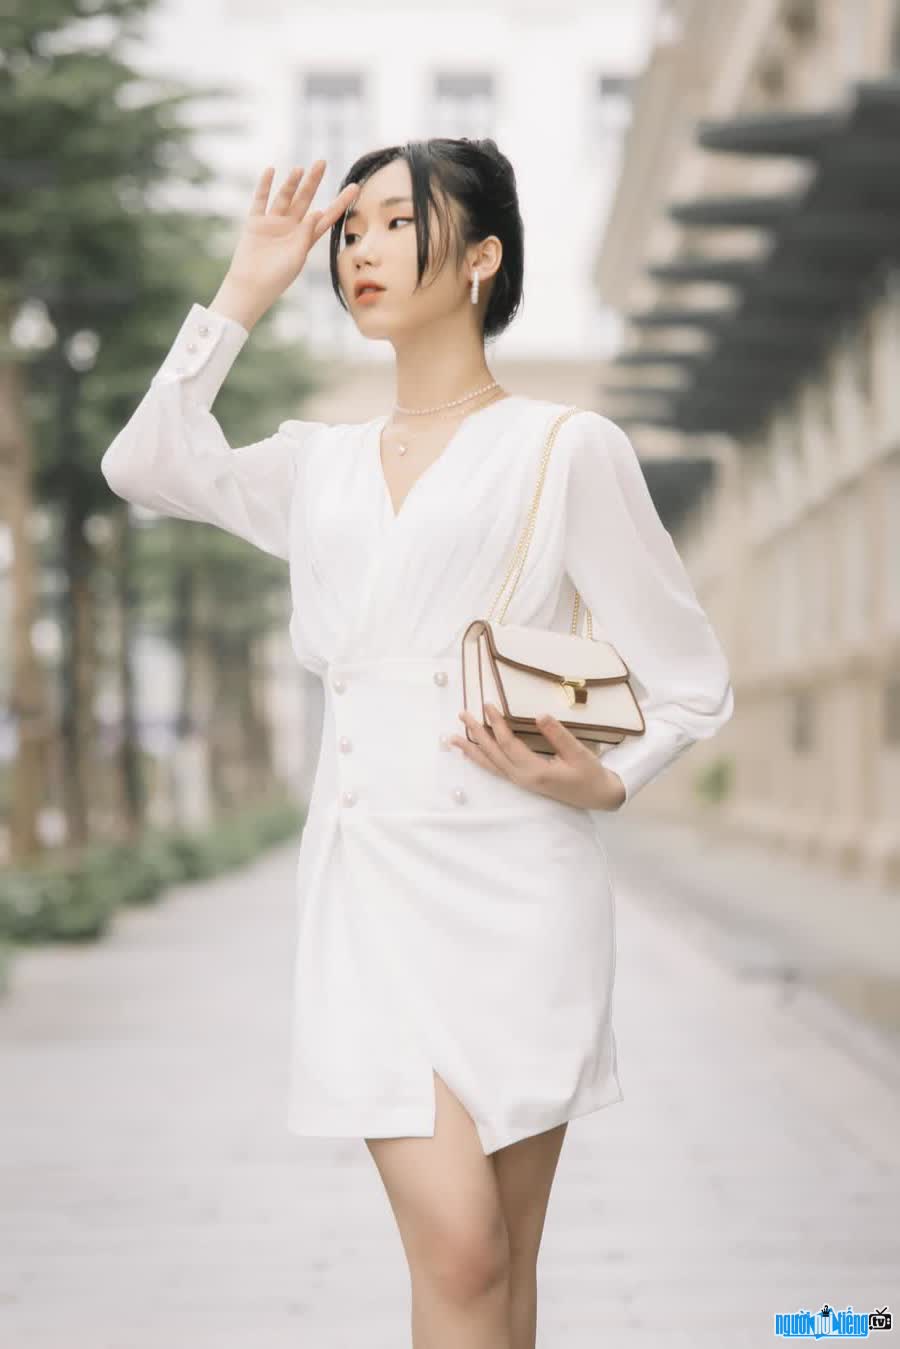 Nguyen Thi Mai Linh has a flexible fashion style